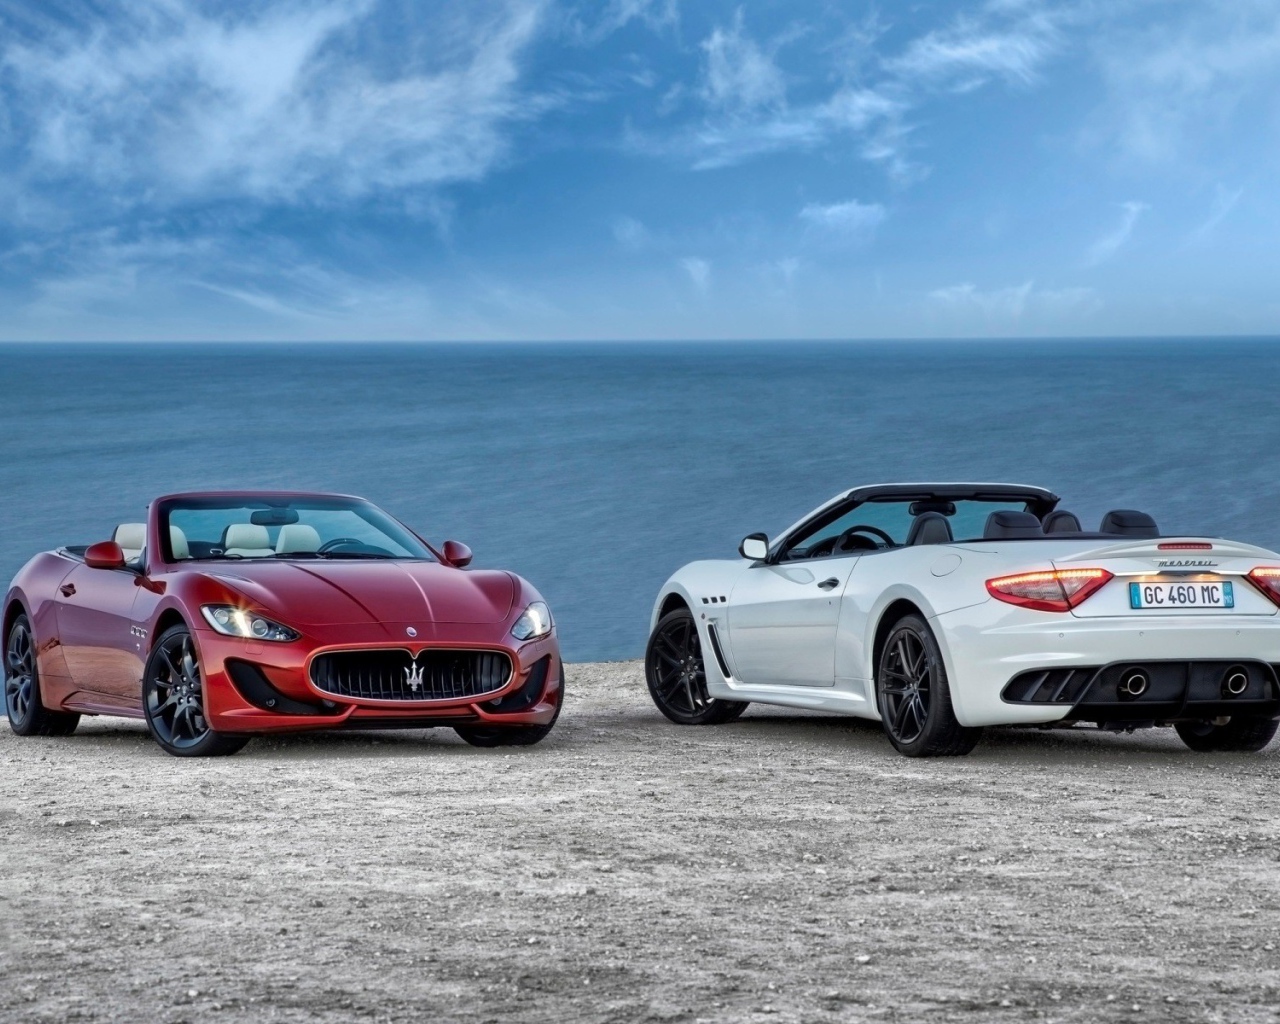 Два автомобиля марки Maserati на берегу моря